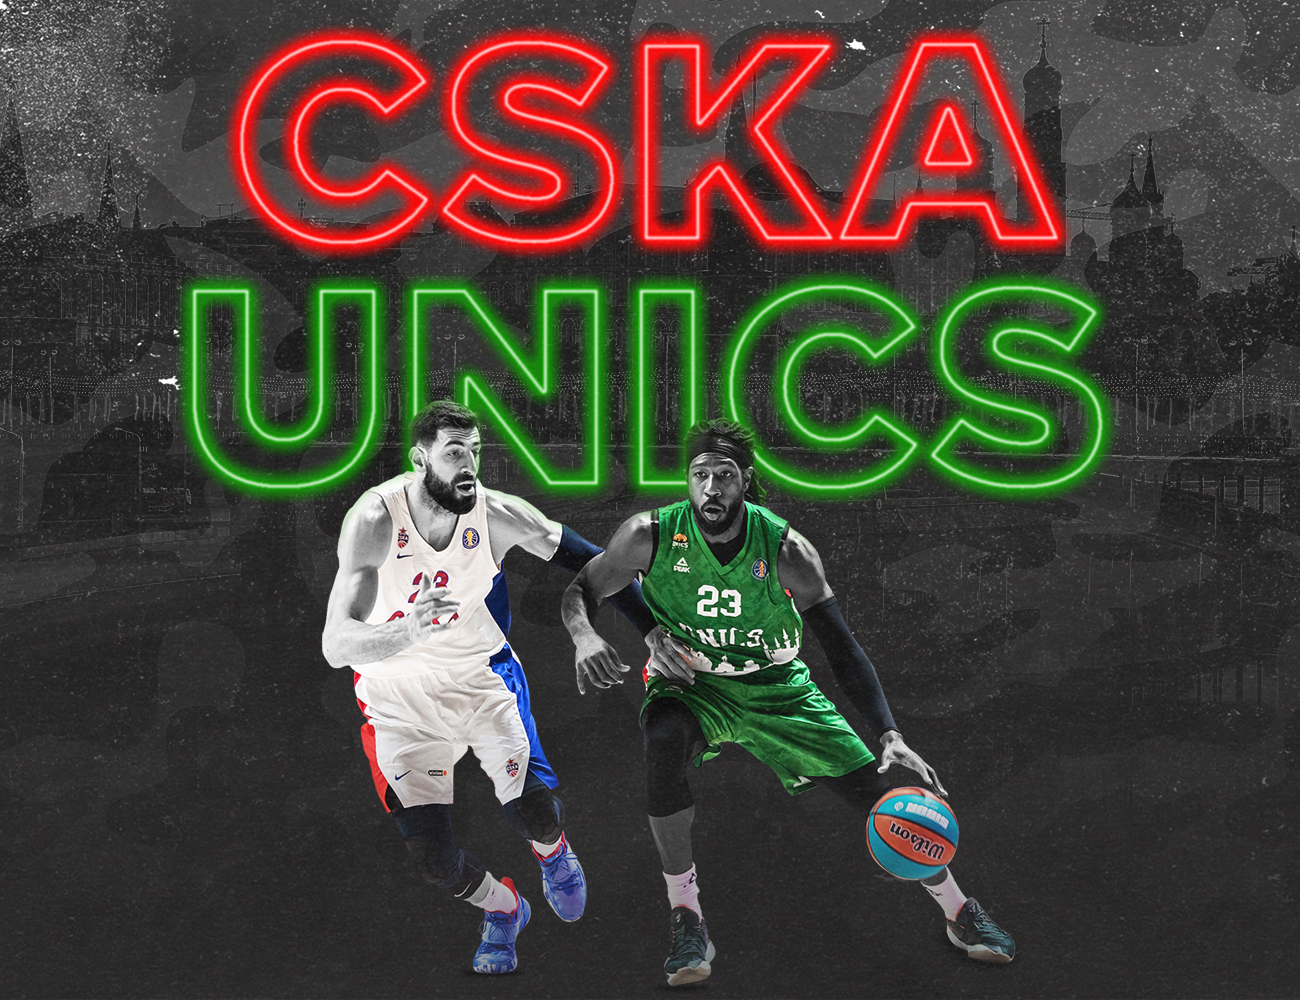 Game of the week. CSKA vs UNICS